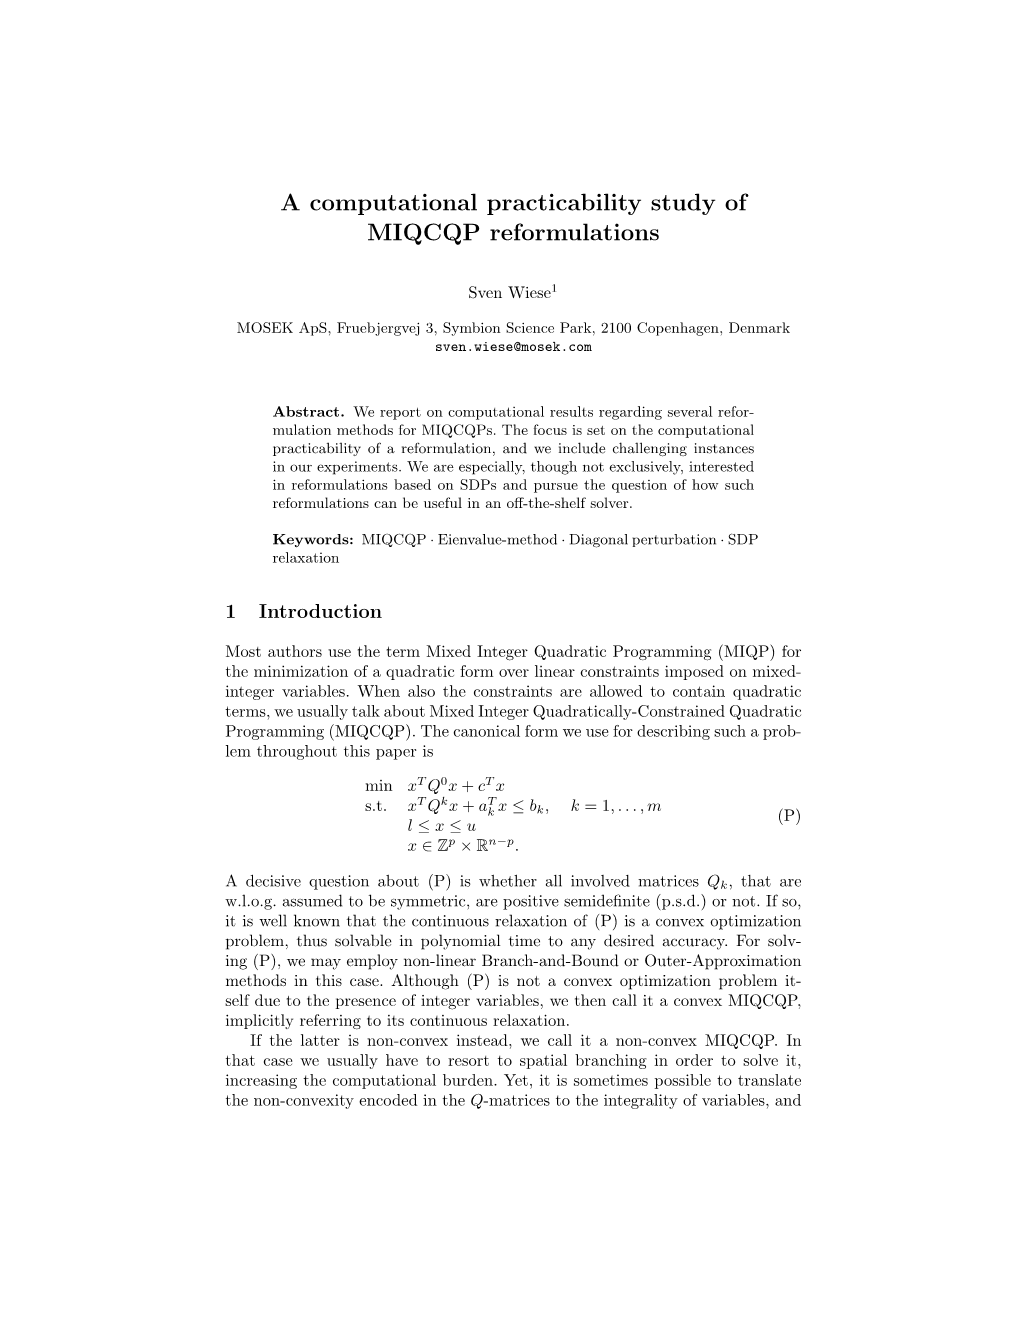 A Computational Practicability Study of MIQCQP Reformulations